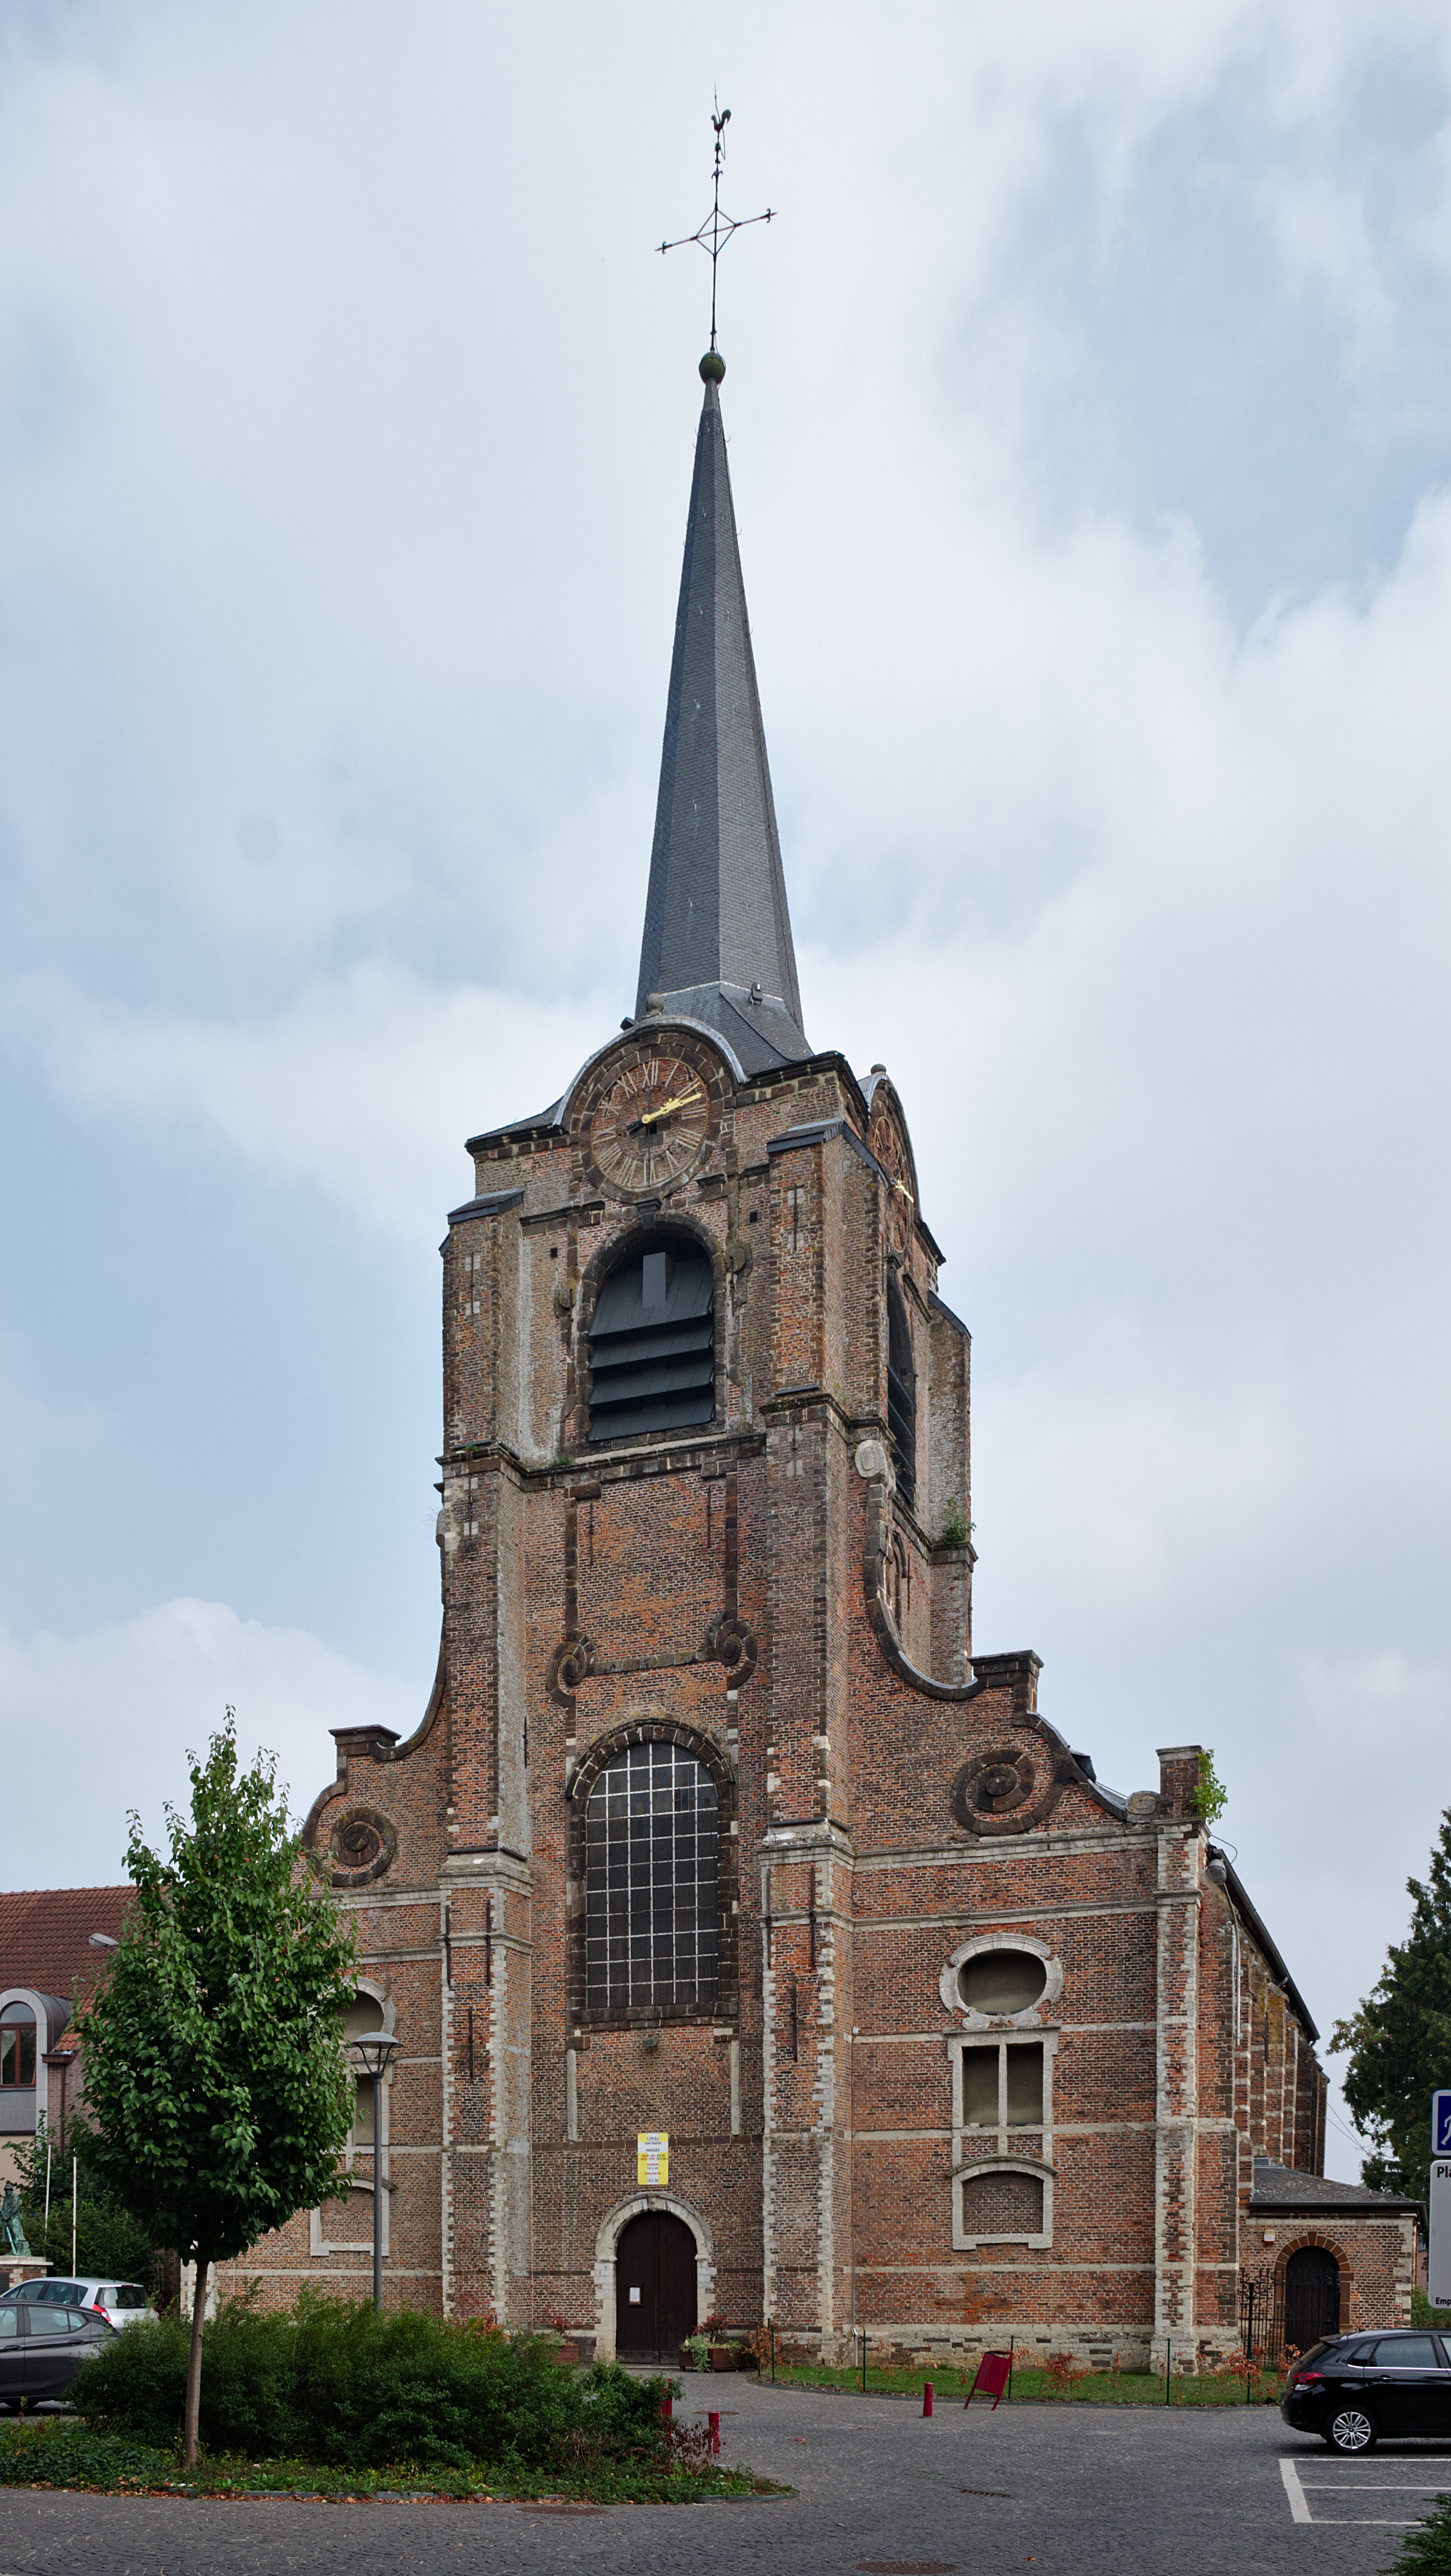 Église Saint-Martin de Limal in Wavre, Belgium (DSCF7573)